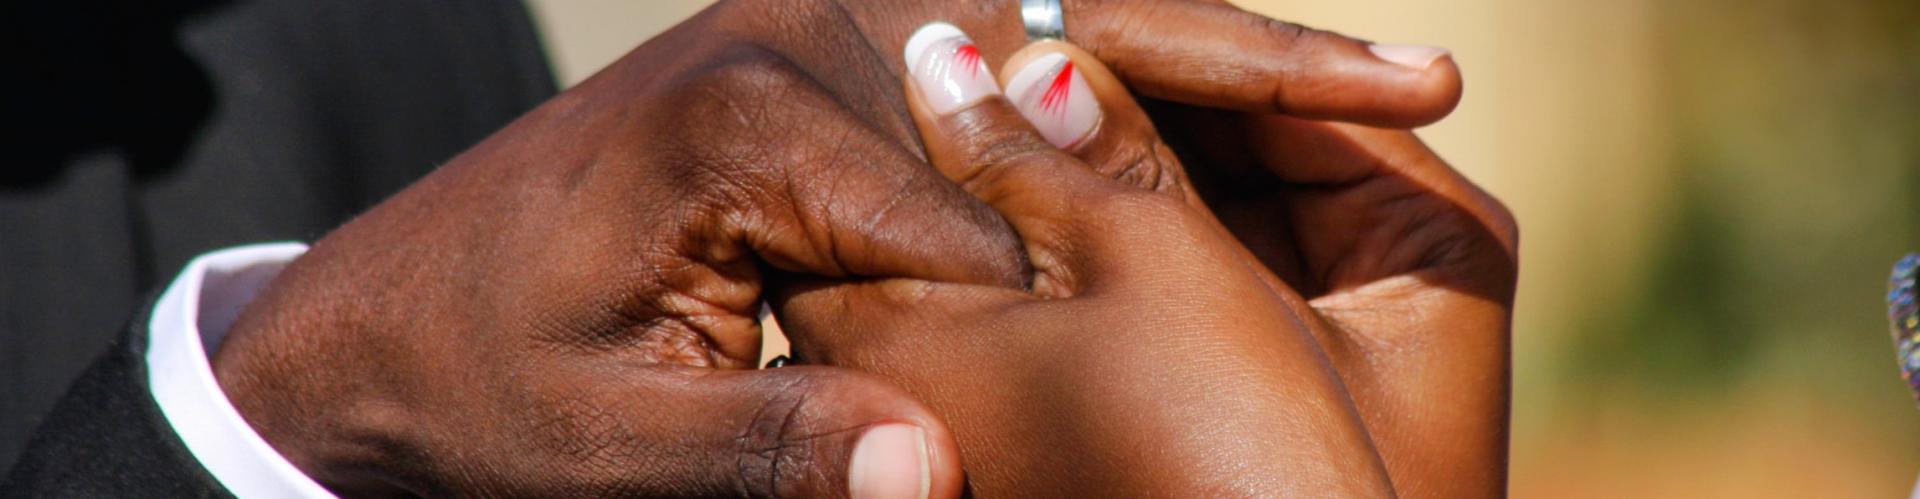 Mariage & Tradition : un mariage au Mali ! 